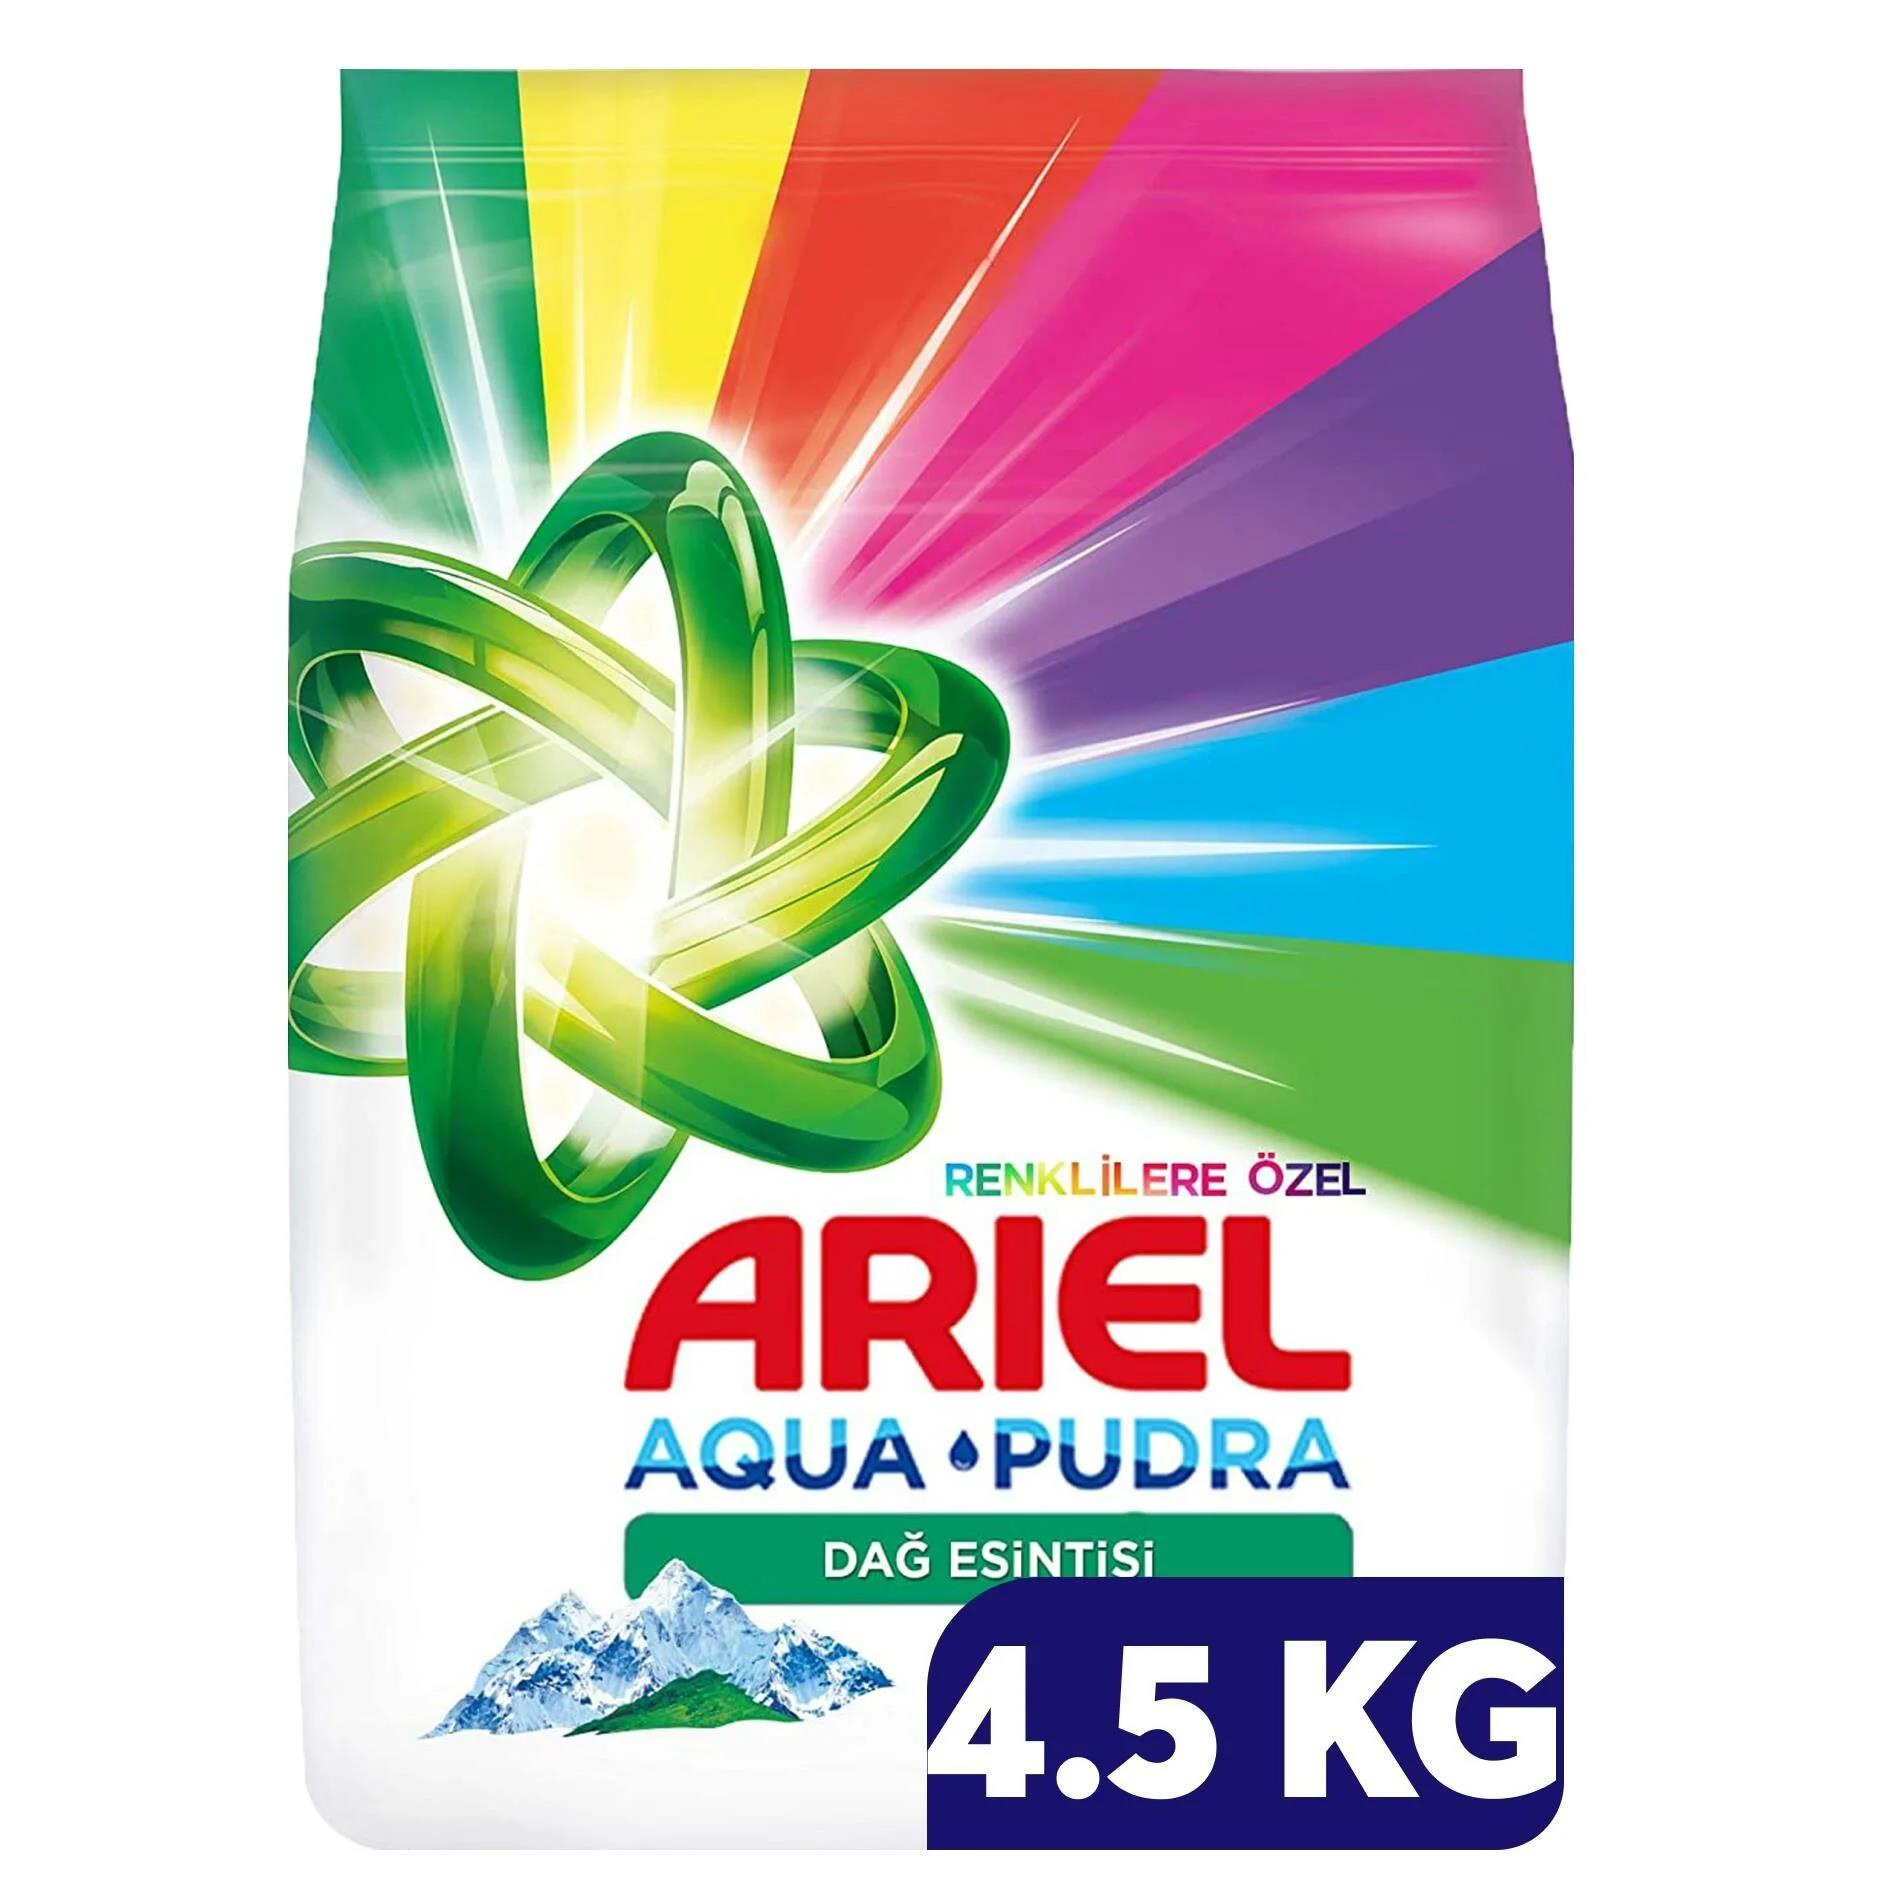 Ariel 4,5 kg Dağ Esintisi Renkliler